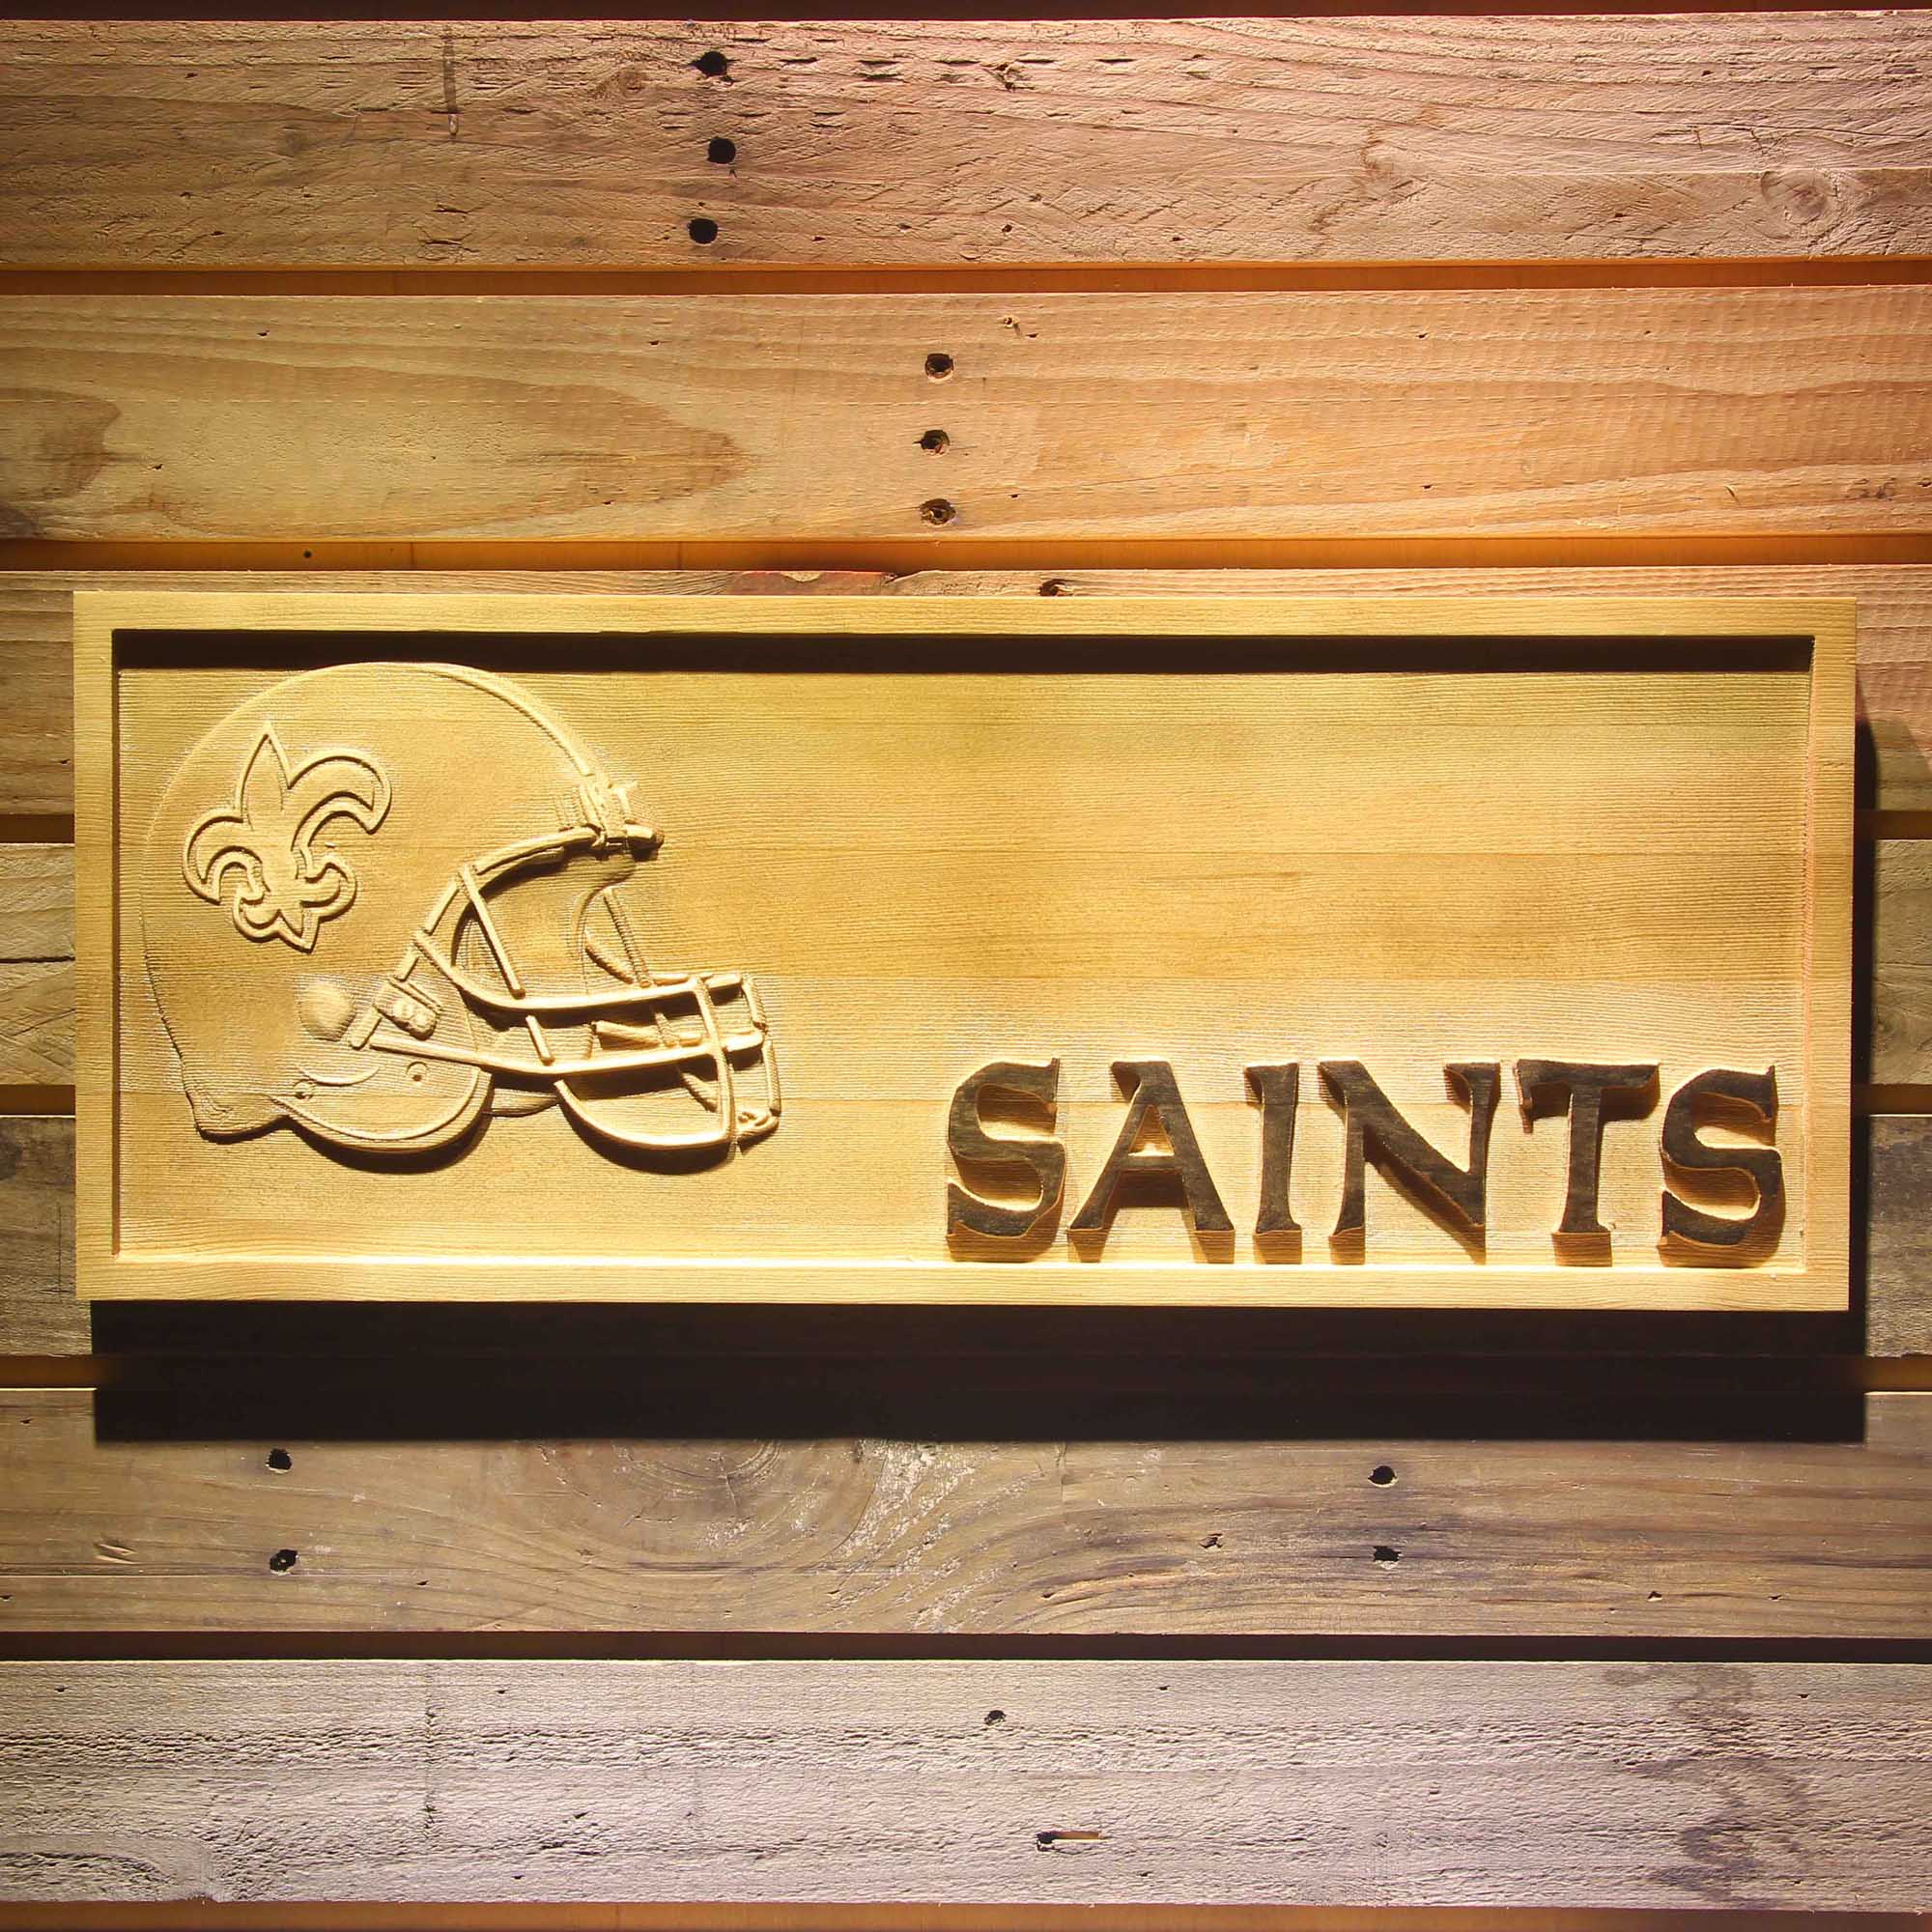 New Orleans Saints 3D Solid Wooden Craving Sign